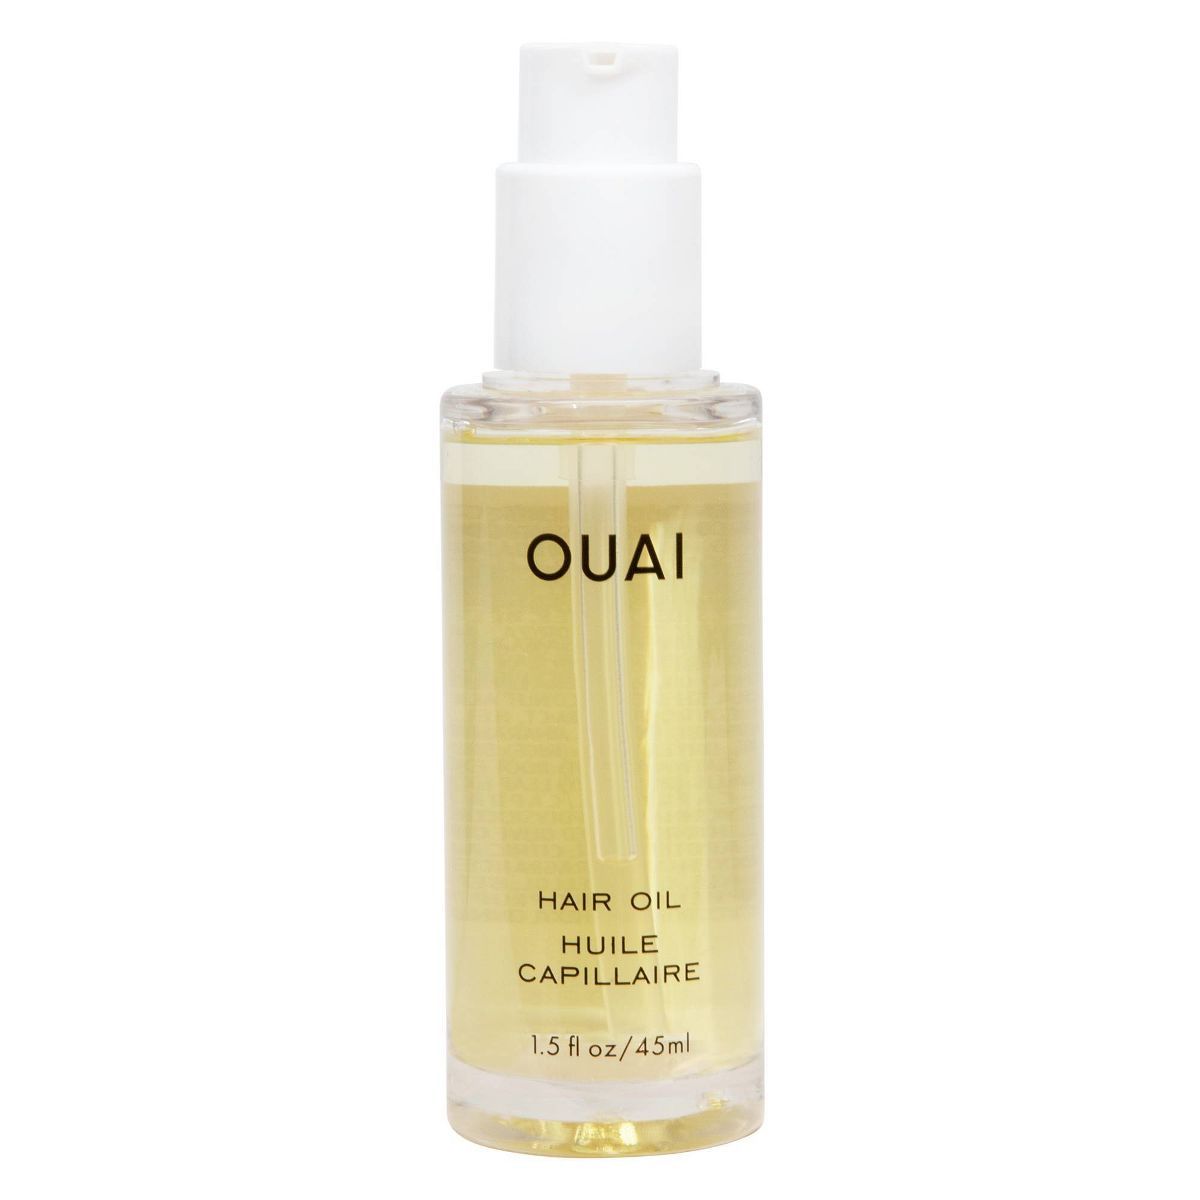 OUAI Hair Oil - Ulta Beauty | Target